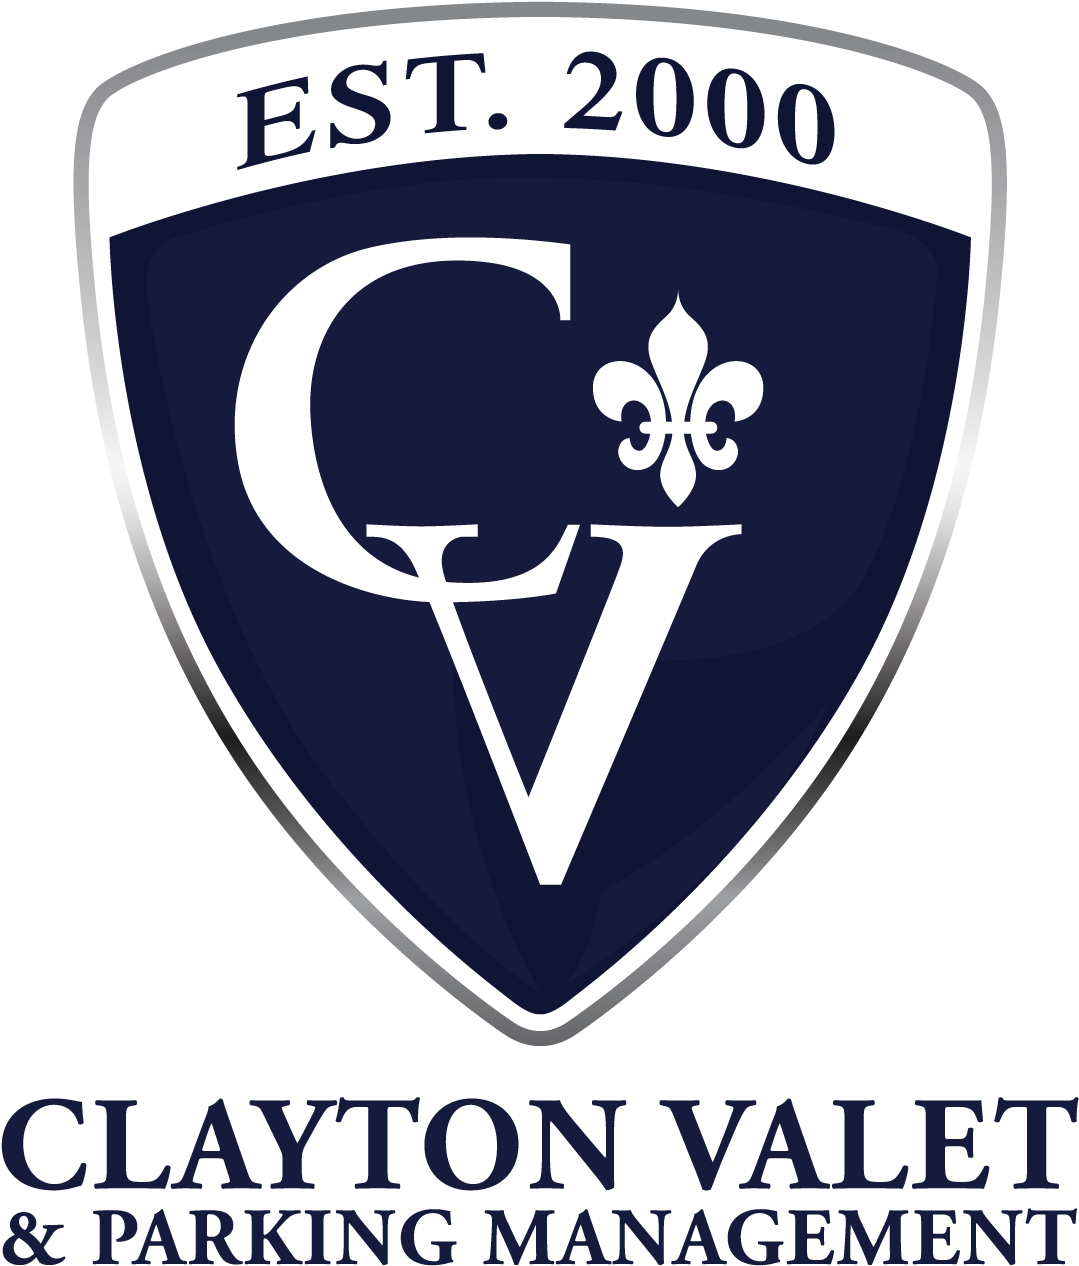 1 800 882 - Clayton Valet & Parking Management (1500x1500), Png Download